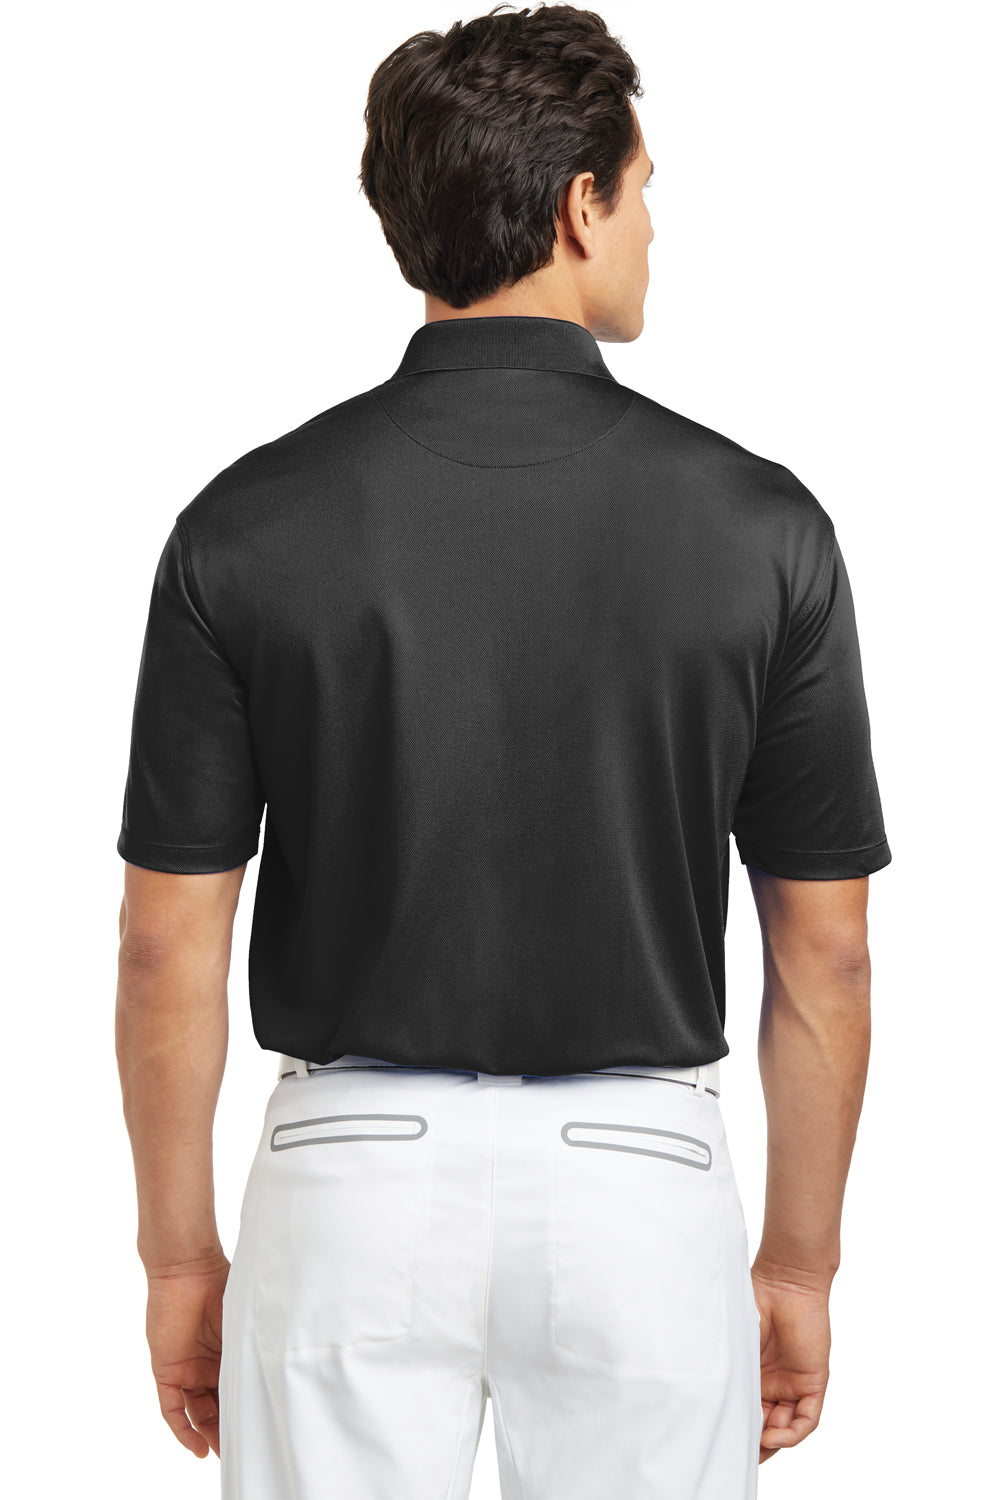 Nike 203690 Mens Tech Basic Dri-Fit Moisture Wicking Short Sleeve Polo Shirt Black Model Back